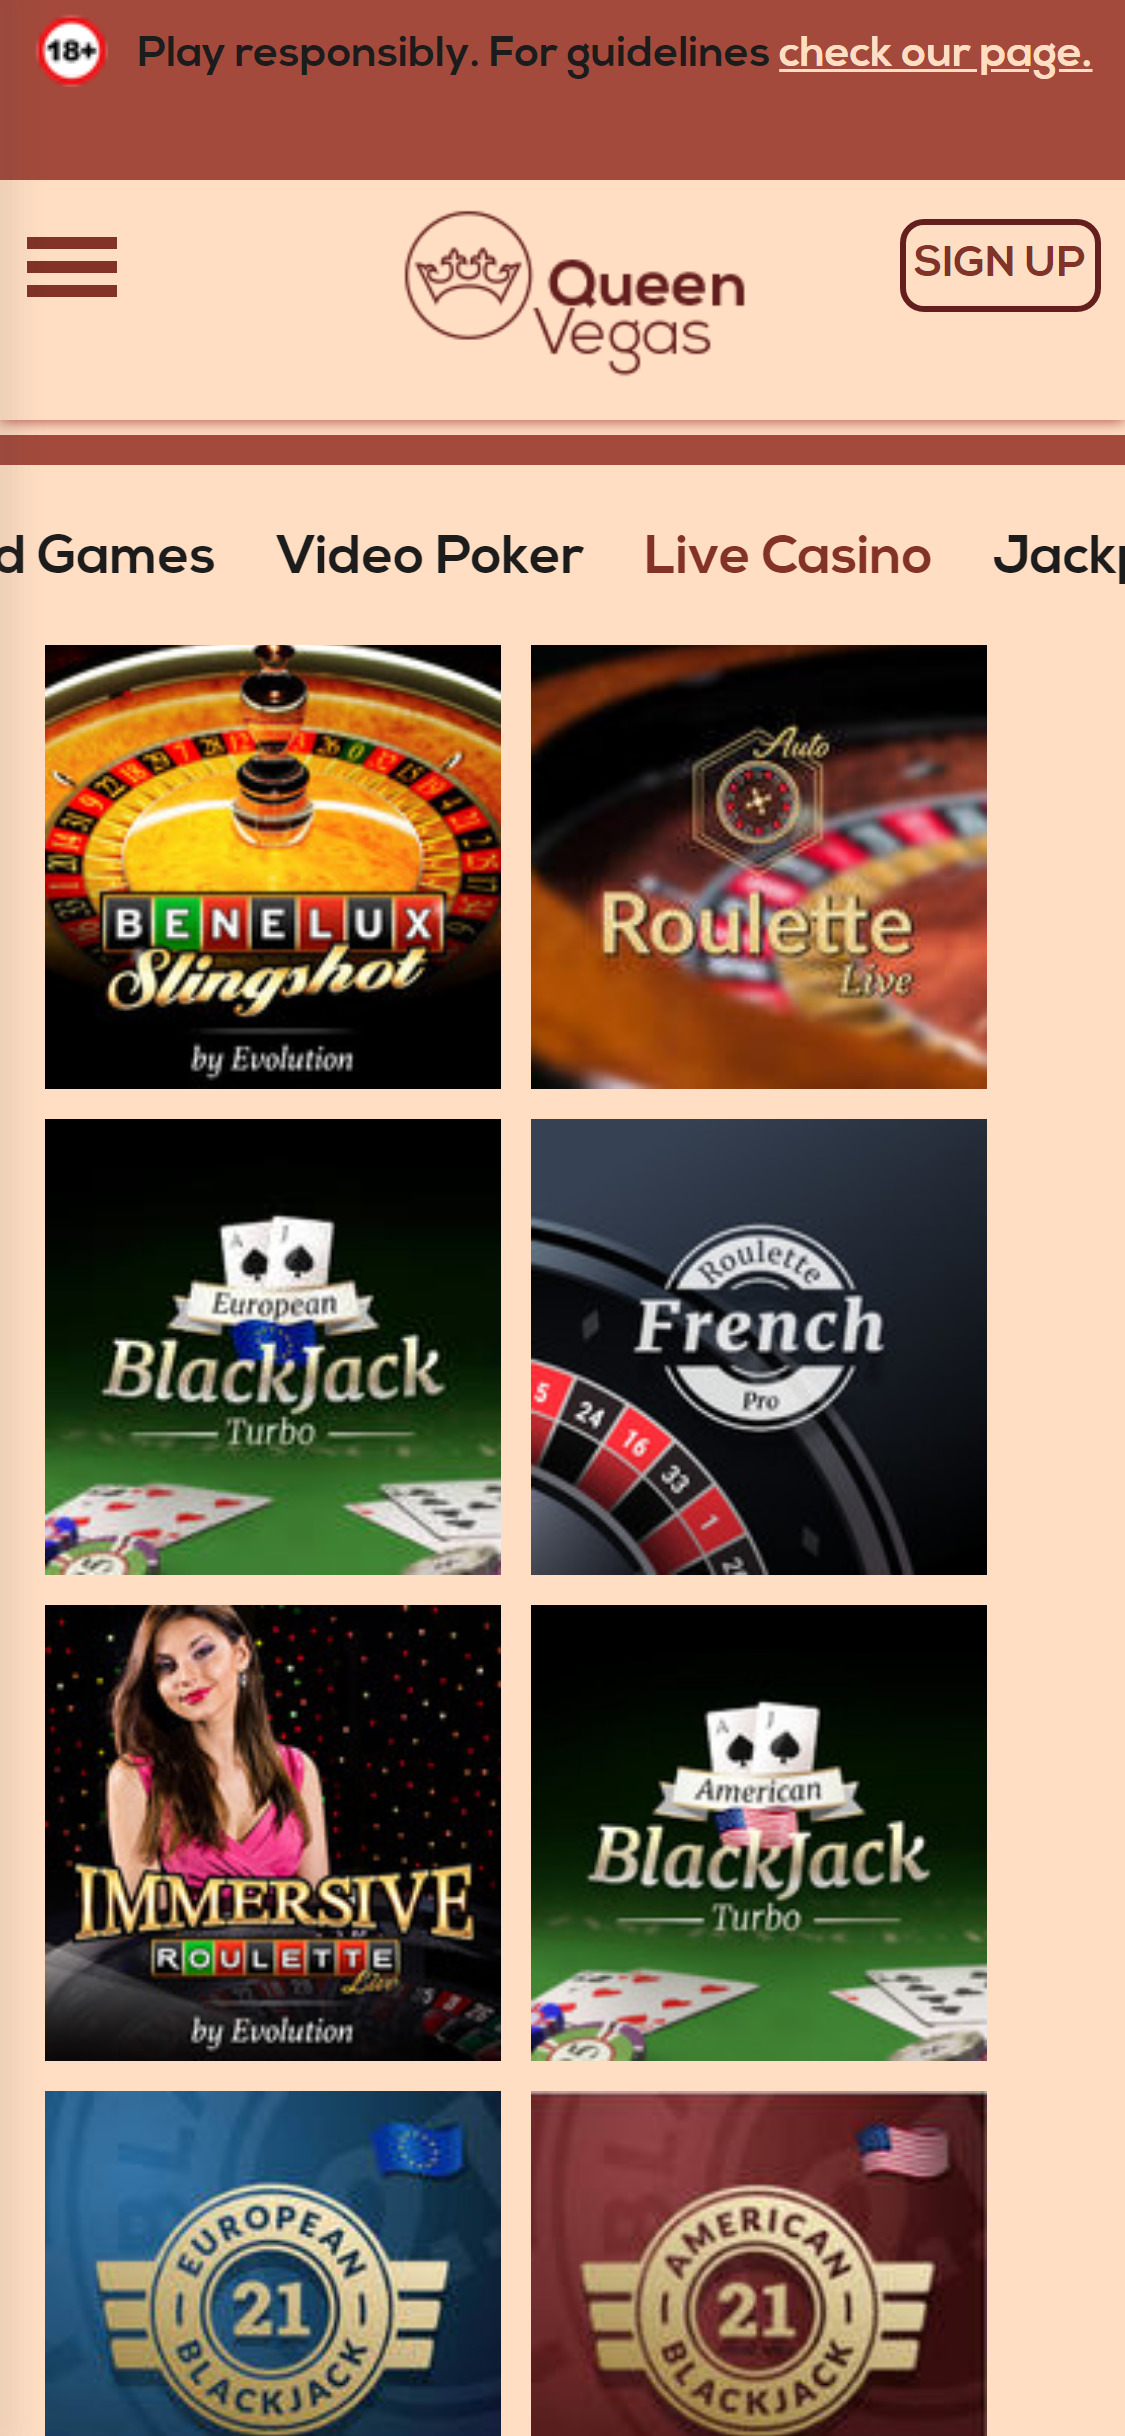 Queen Vegas Casino Mobile Live Dealer Games Review